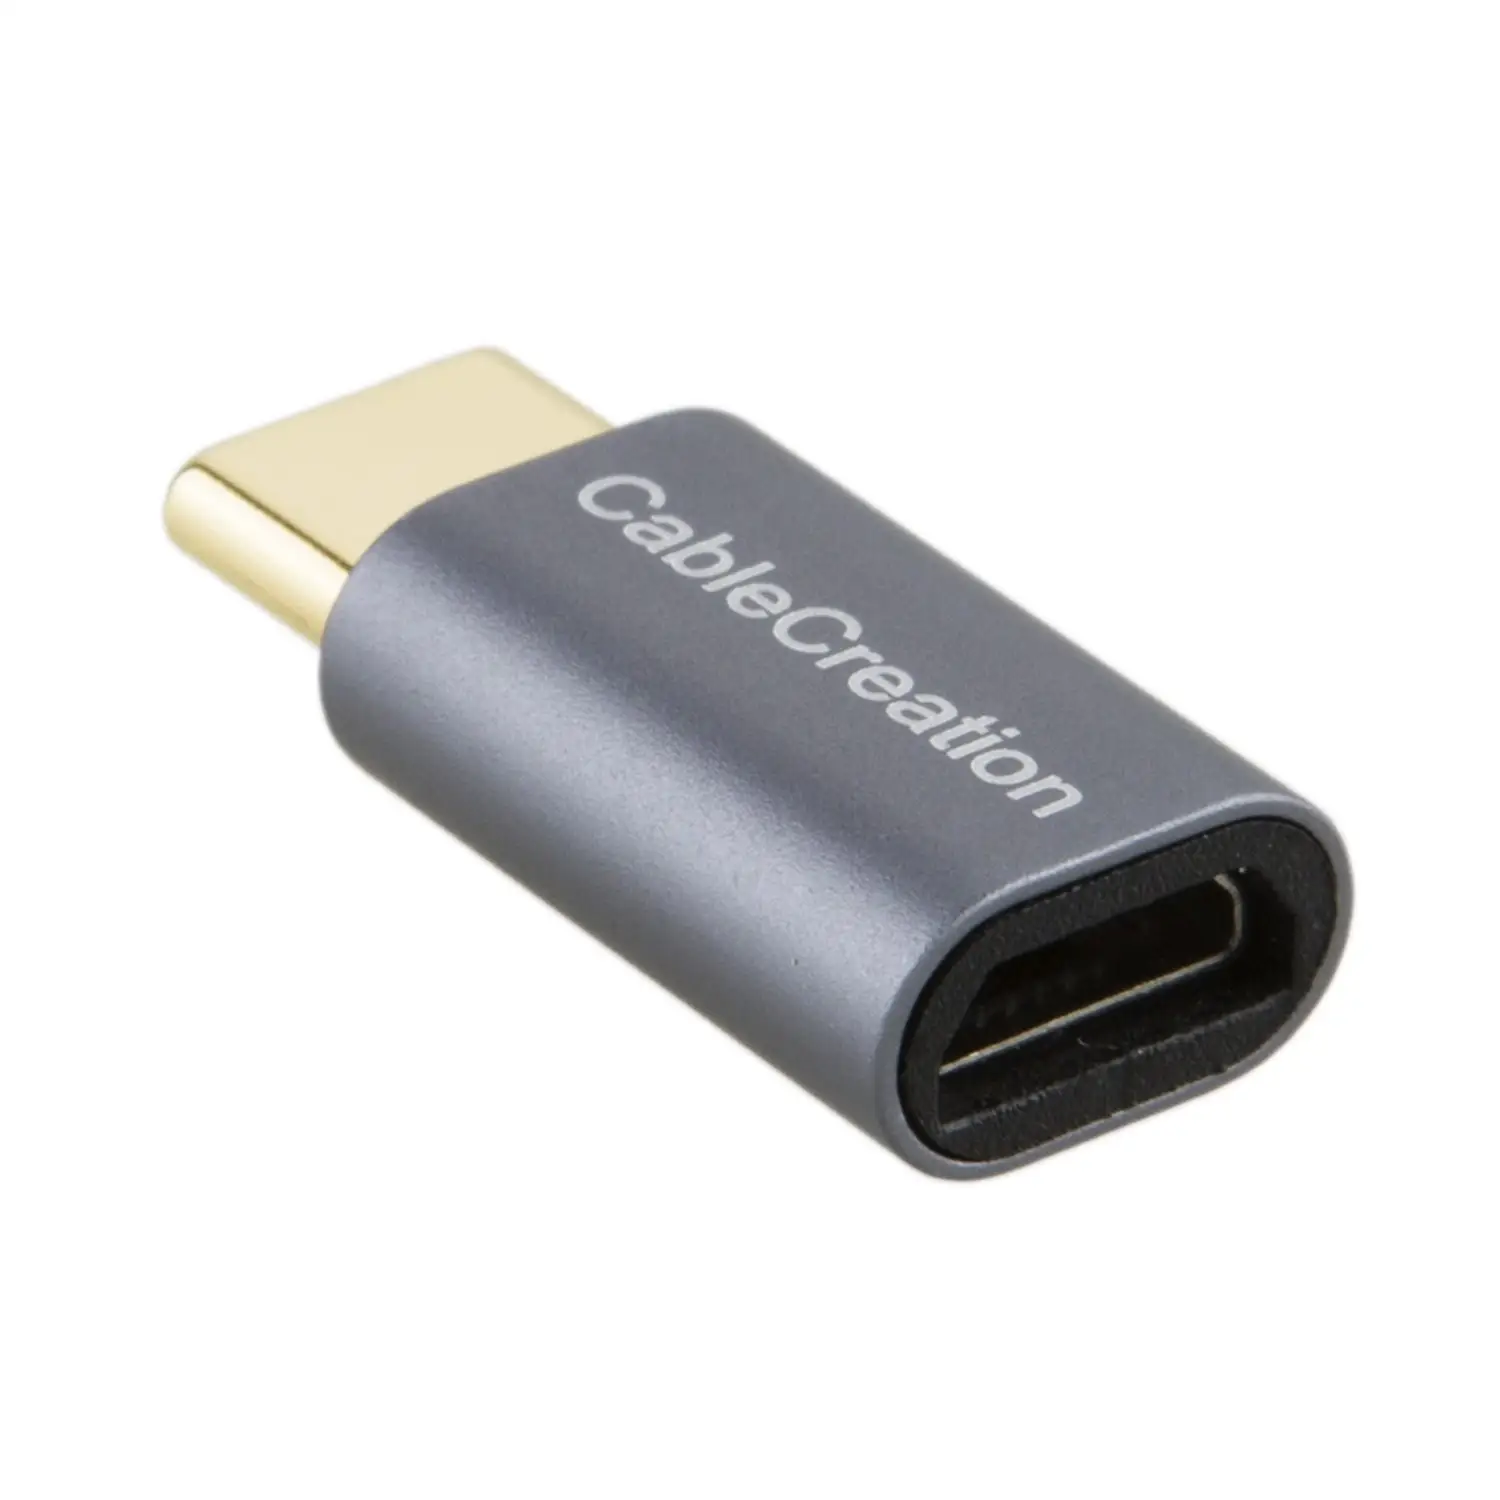 Cable Creation Typ C zu Micro USB FeMale Adapter USB-C zu Micro OTG Konverter für Smartphone